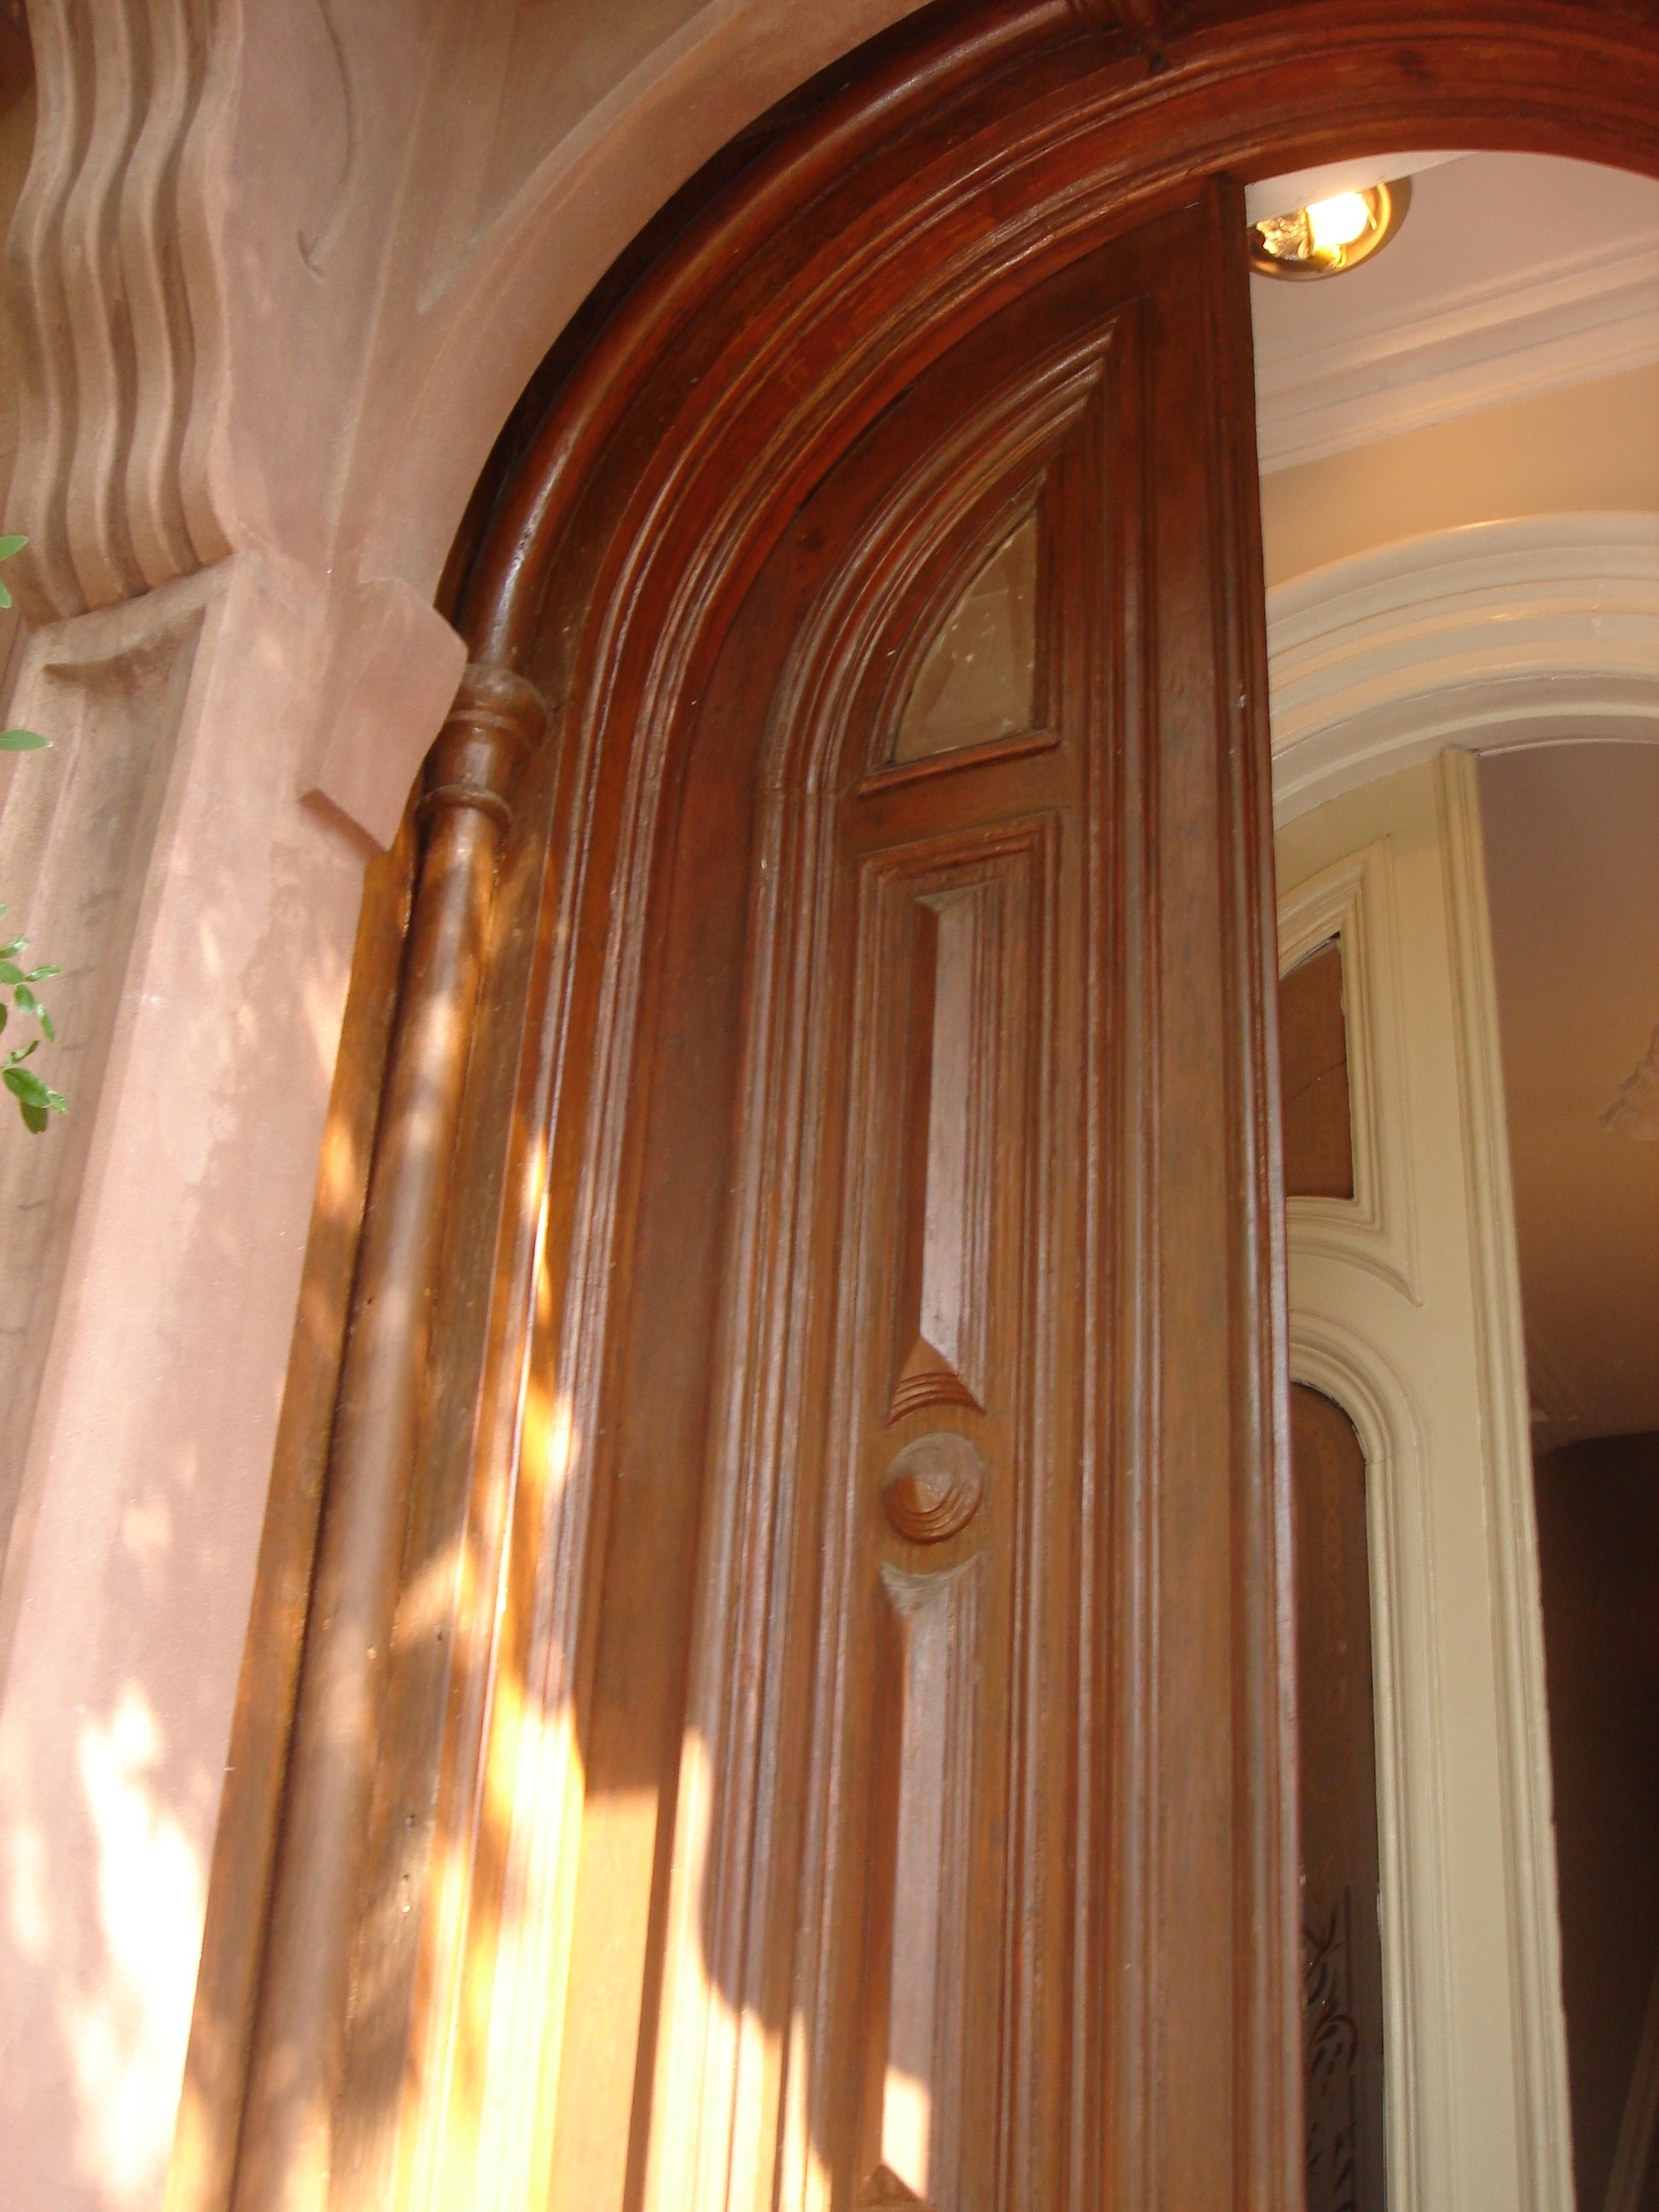 Entry way and vestibule doors